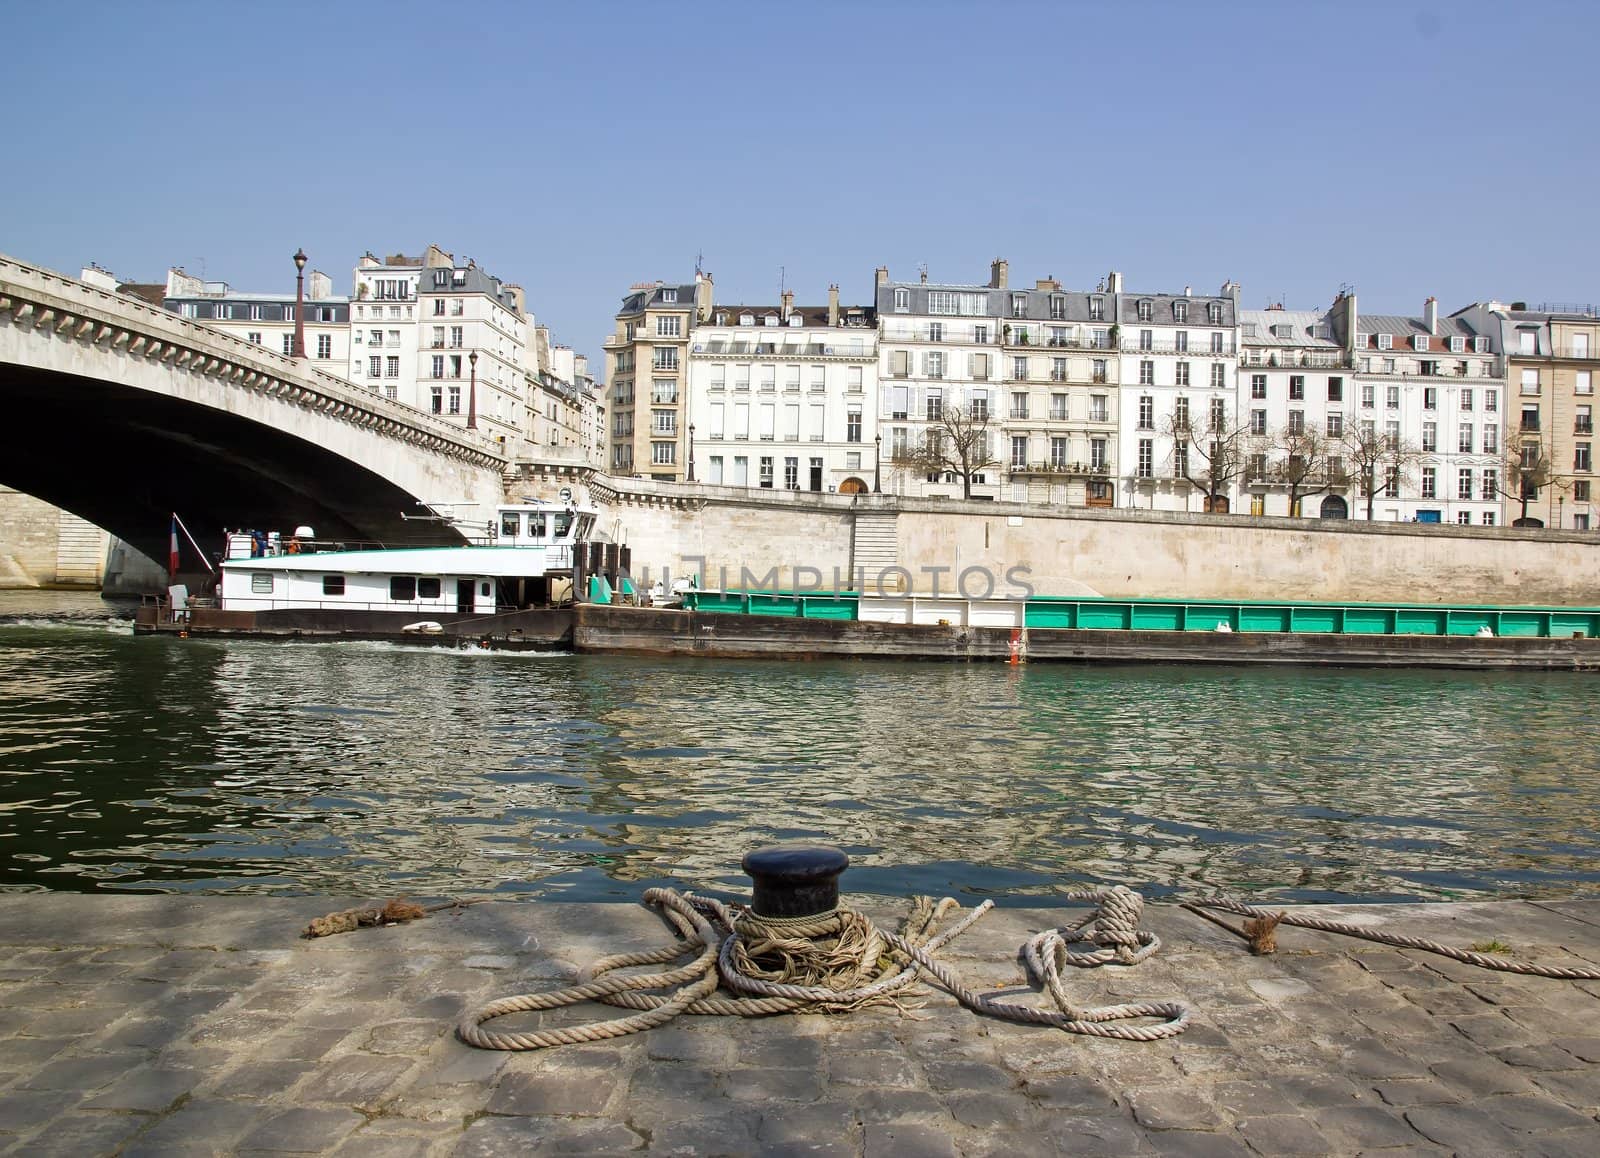 passage of a barge on the Seine  Paris France